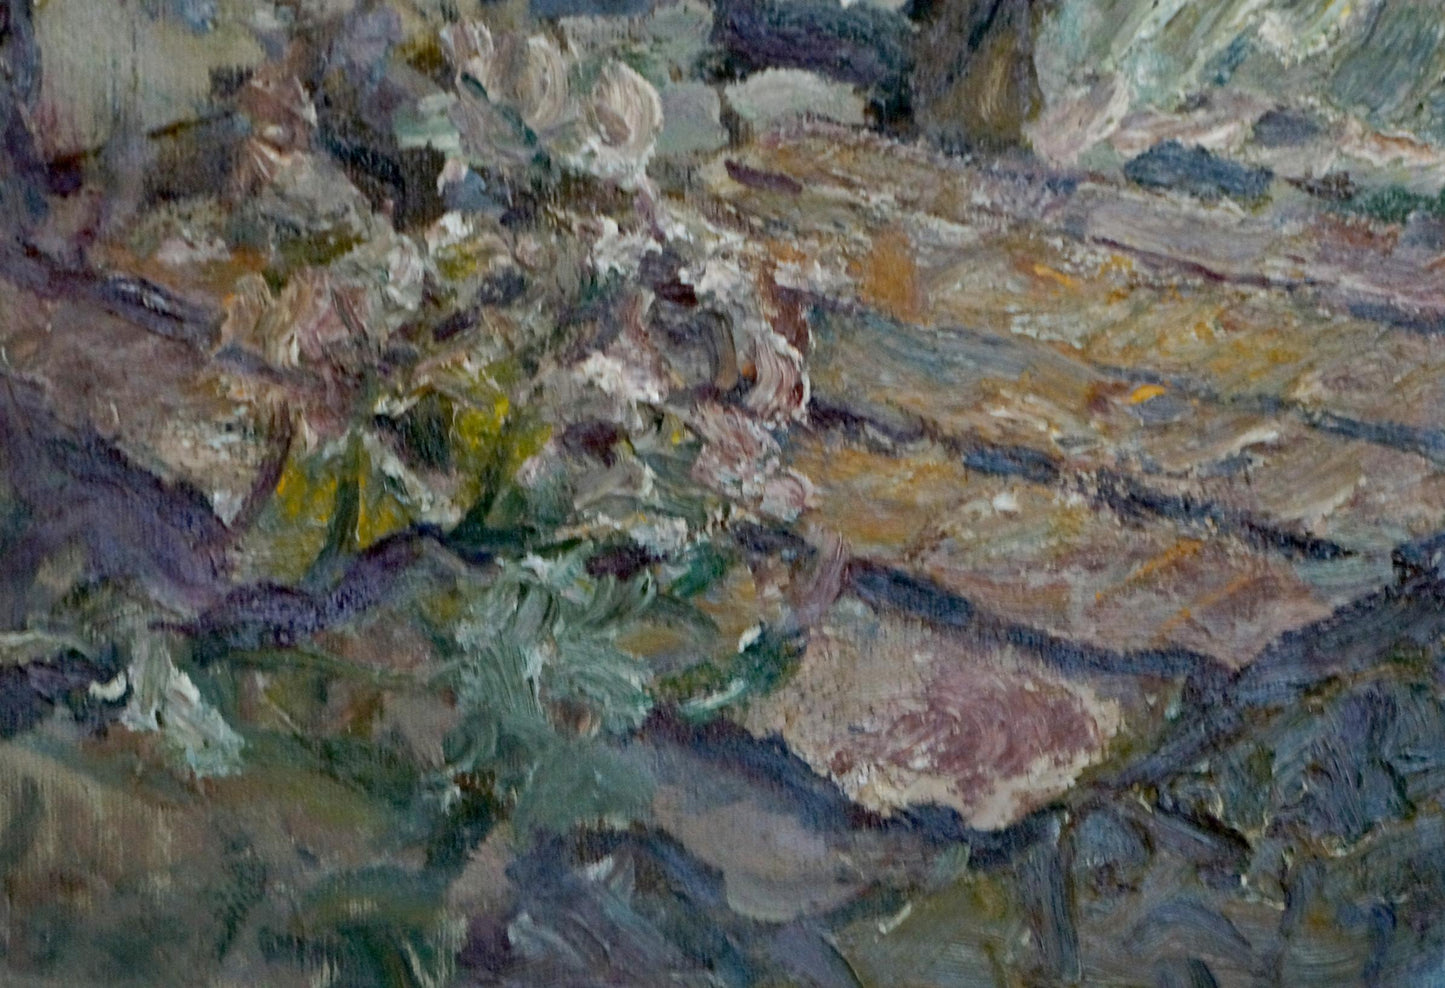 Oil painting Spring landscape Khan Nikolay Alekseevich